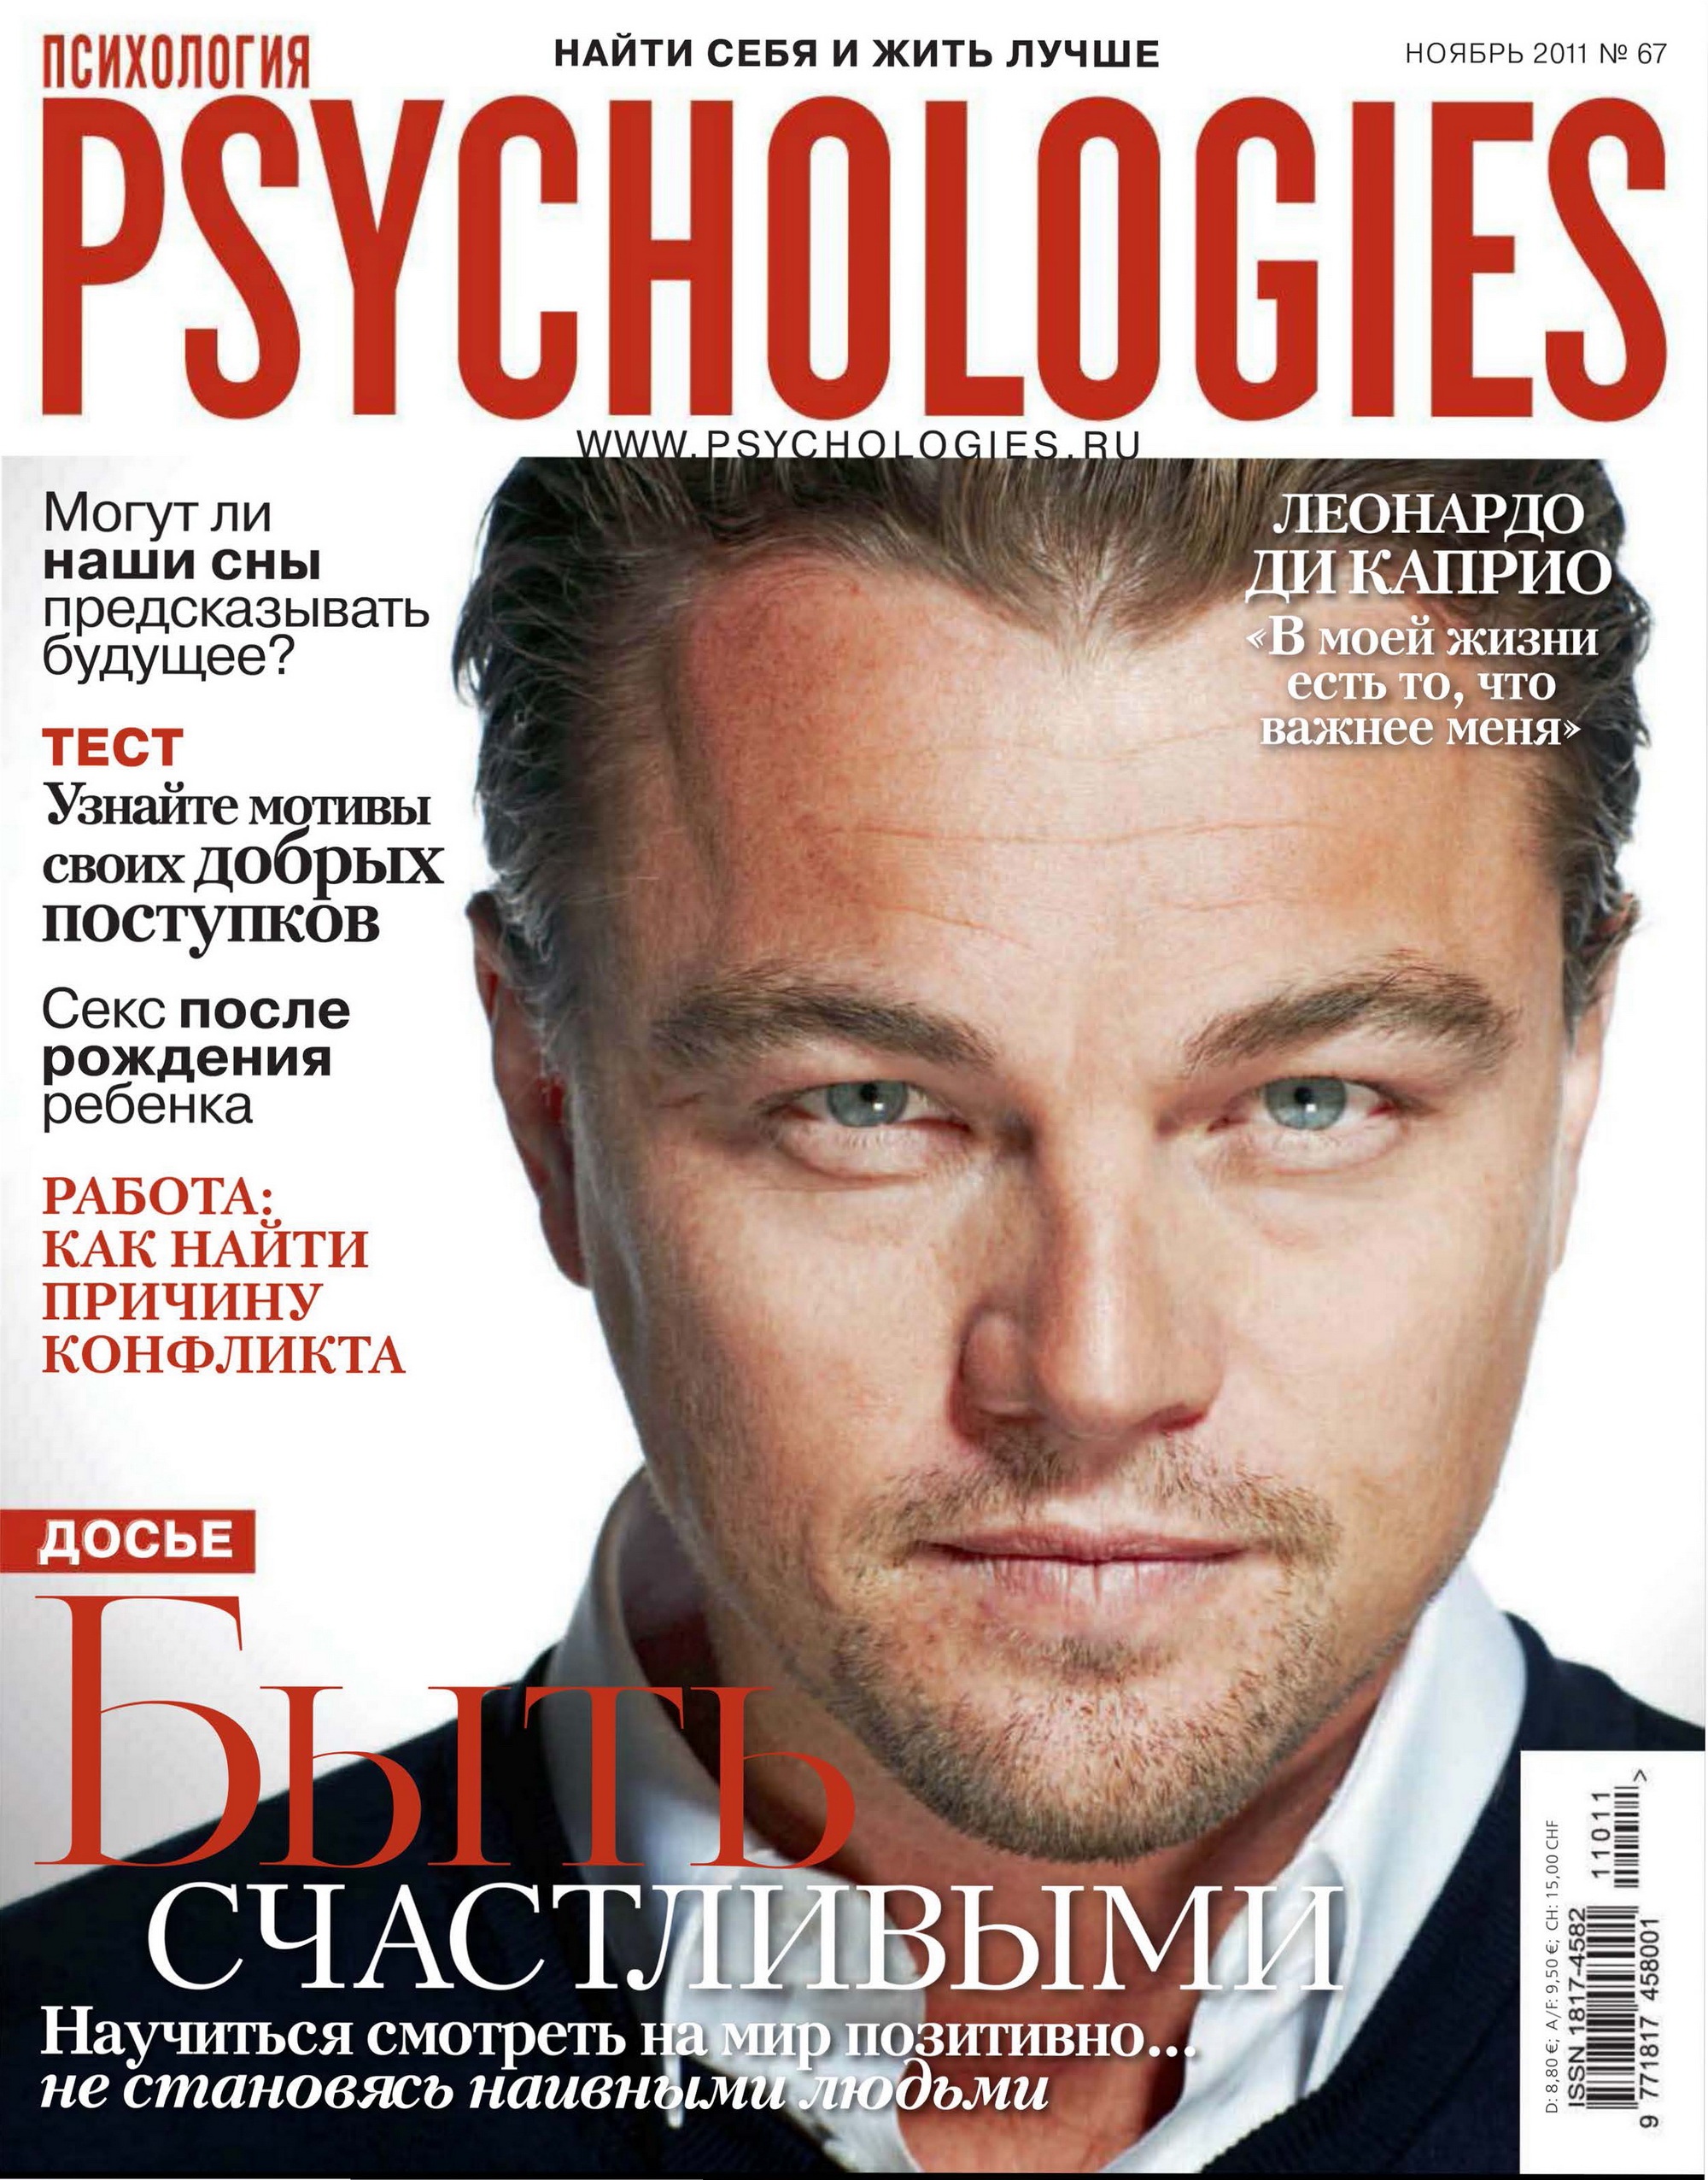 Журнал психоанализ. Журнал Psychologies. Обложки журнала психология. Журнал Психолоджи ноябрь. Обложка журнала Psychologies.